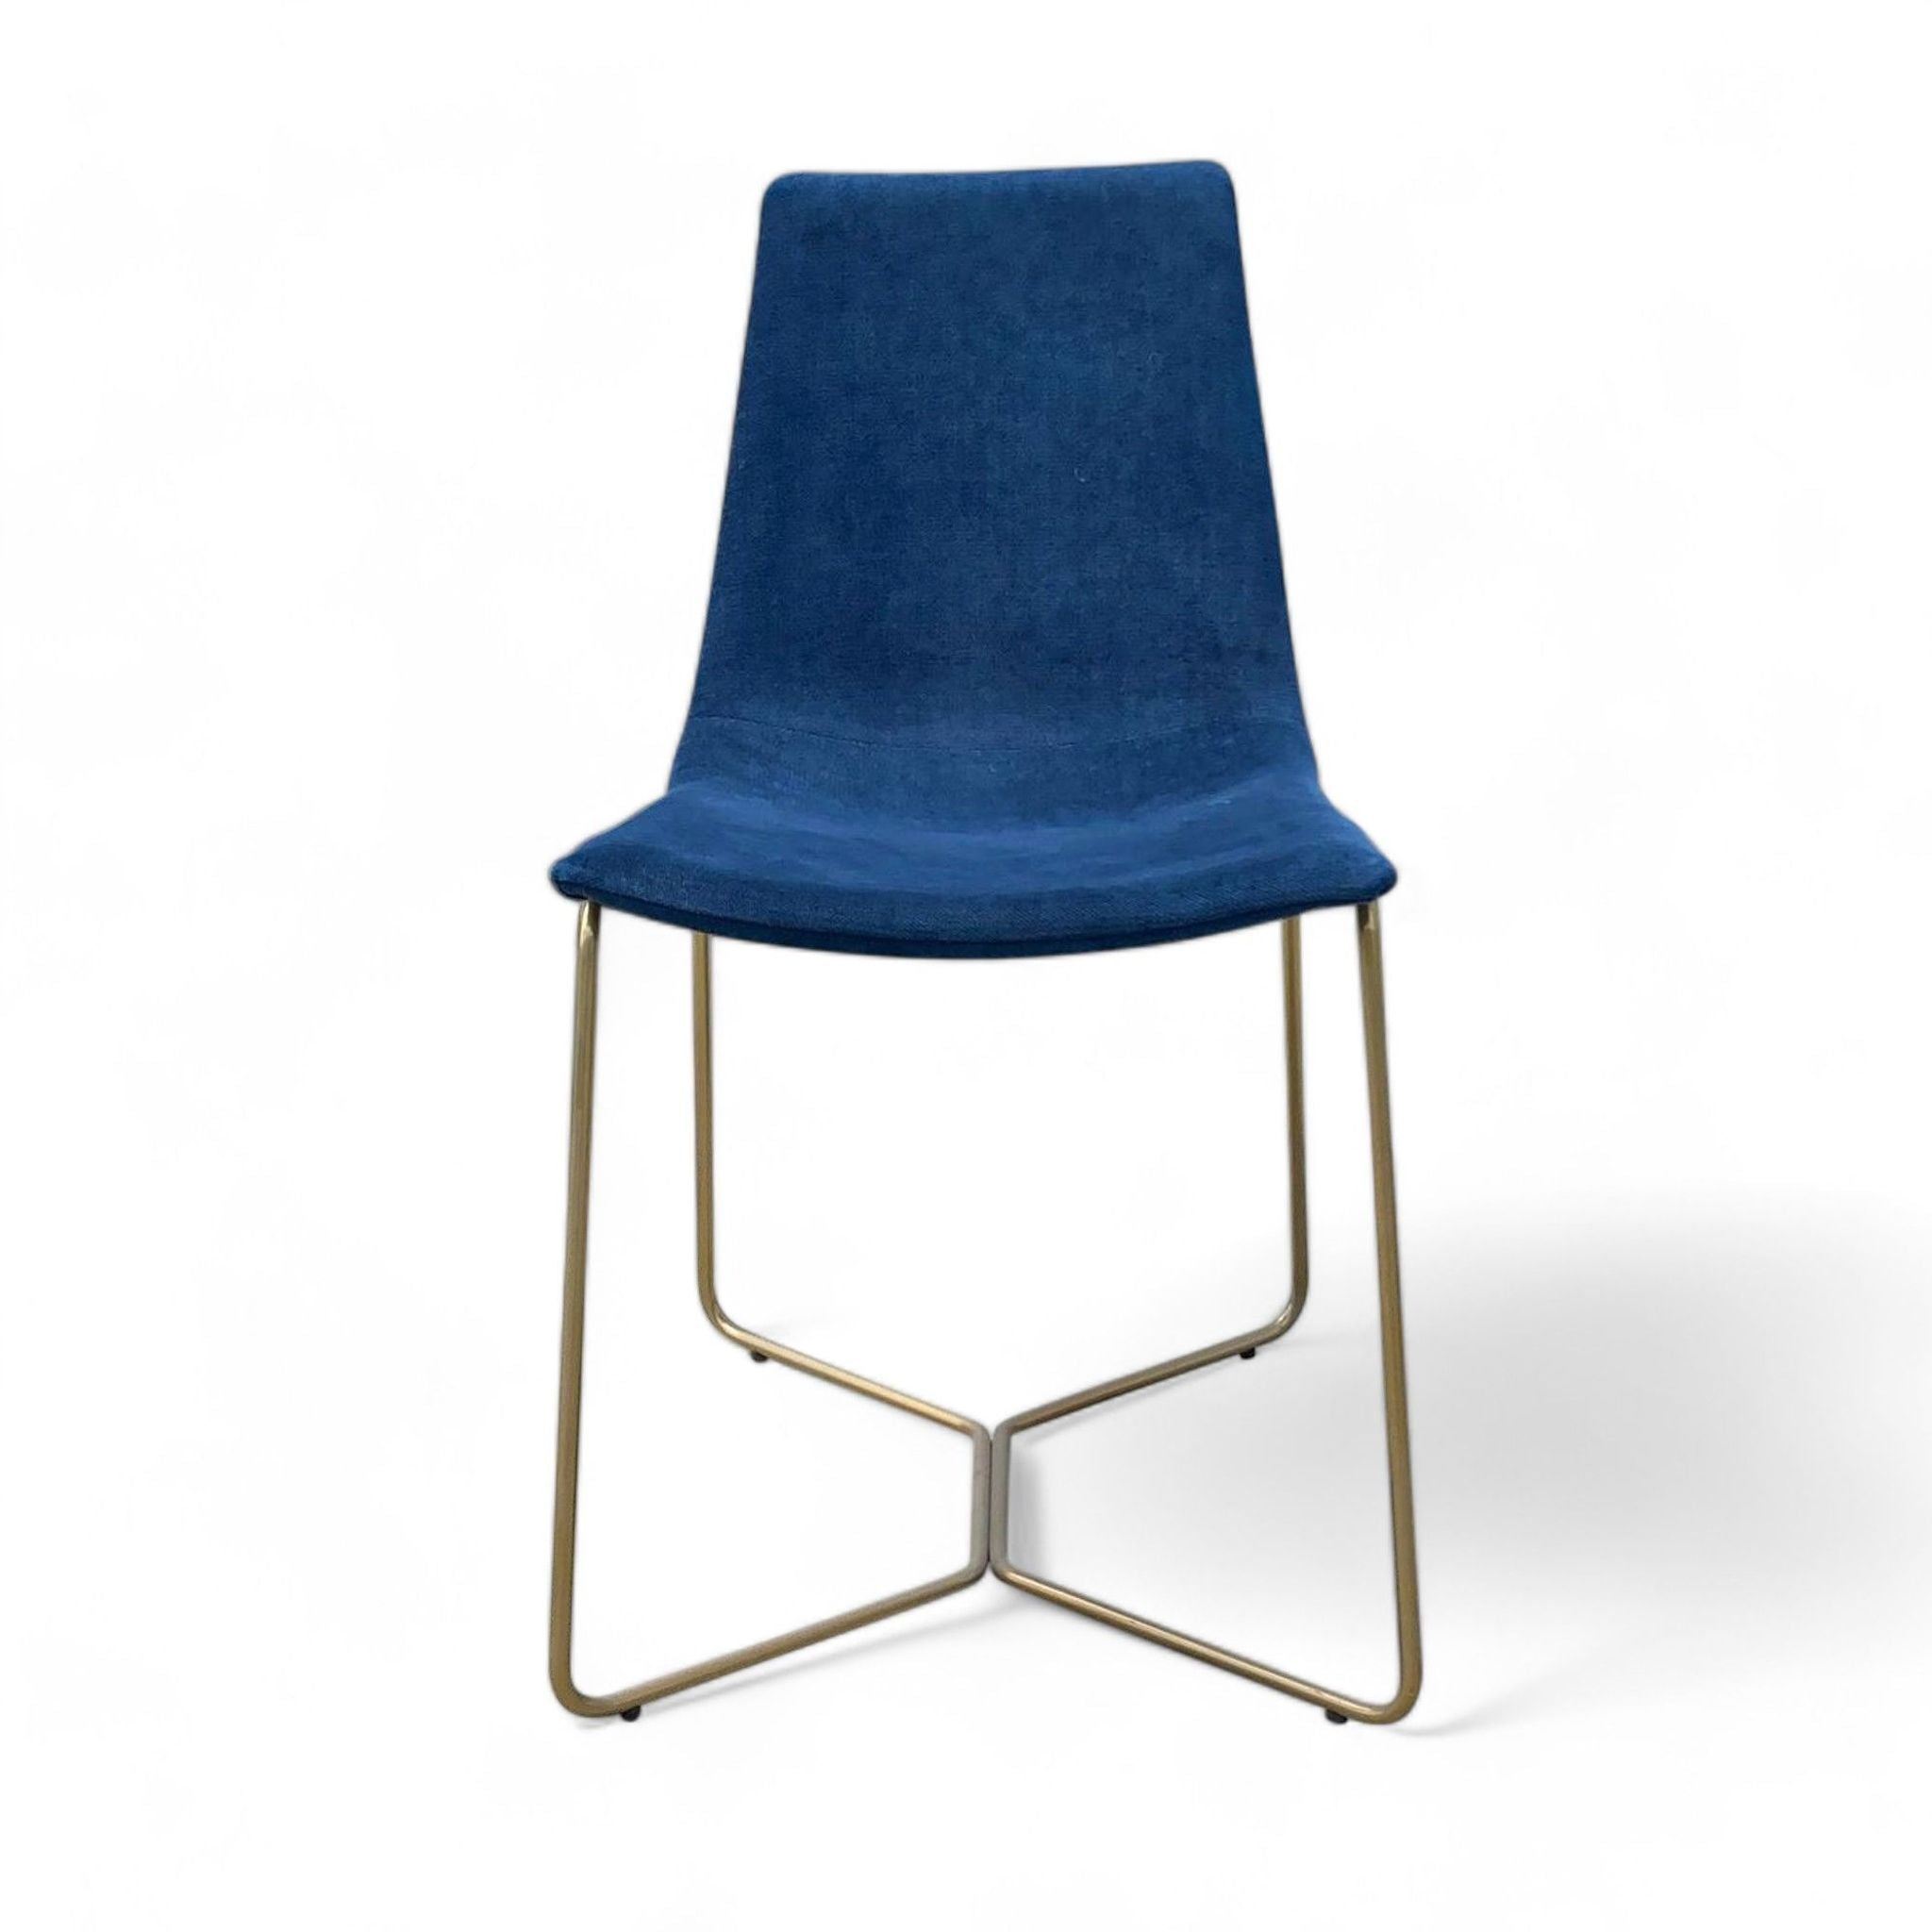 West Elm Slope dining chair, blue velvet upholstery, brass-finished metal frame, modern design.